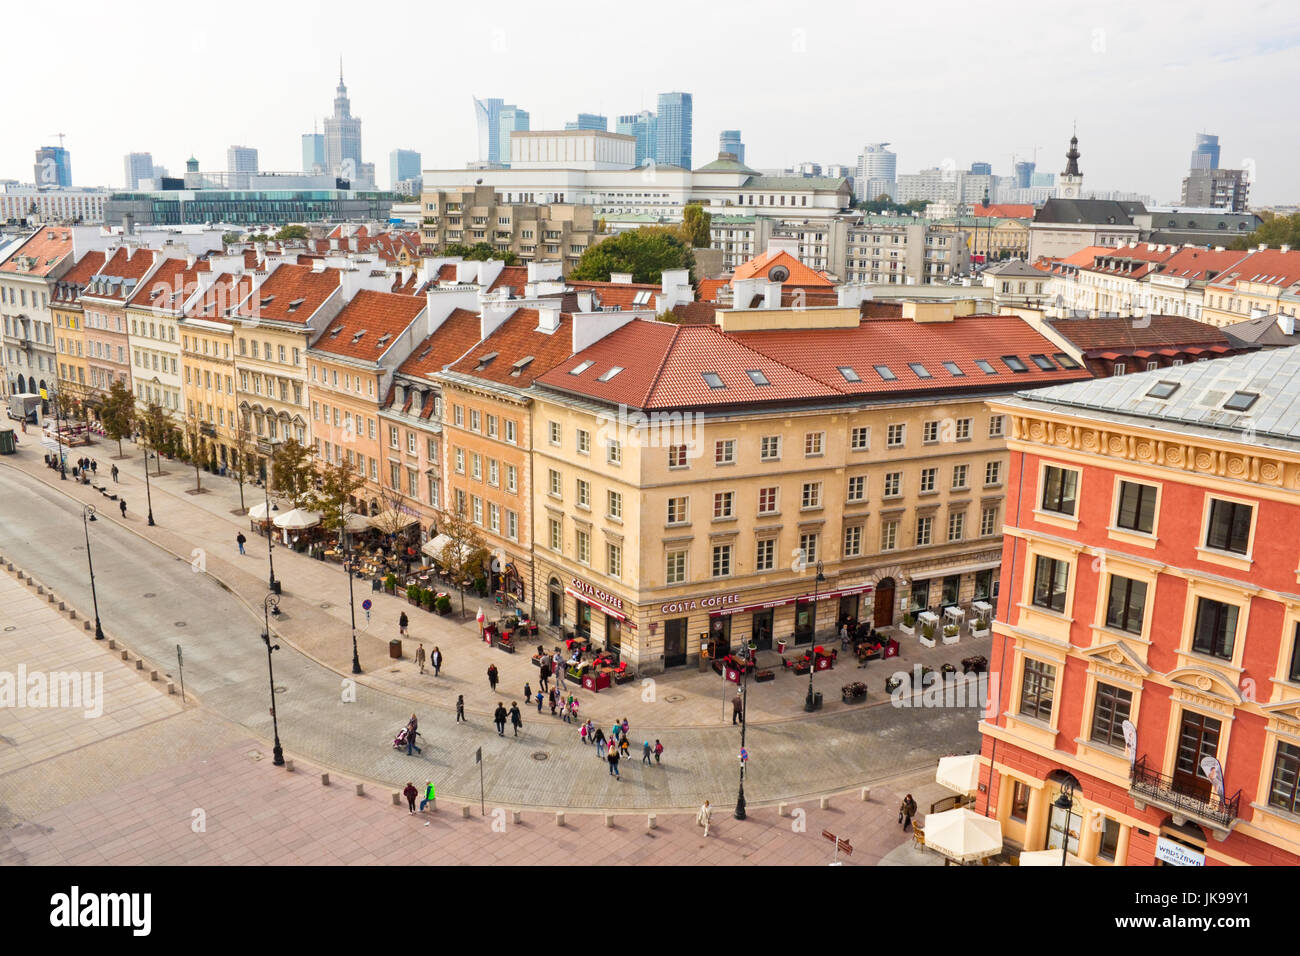 Varsavia, Polonia - 25 Settembre 2014: Krakowskie Przedmiescie - uno degli storici centrali strade di Varsavia visto da sopra. Foto Stock